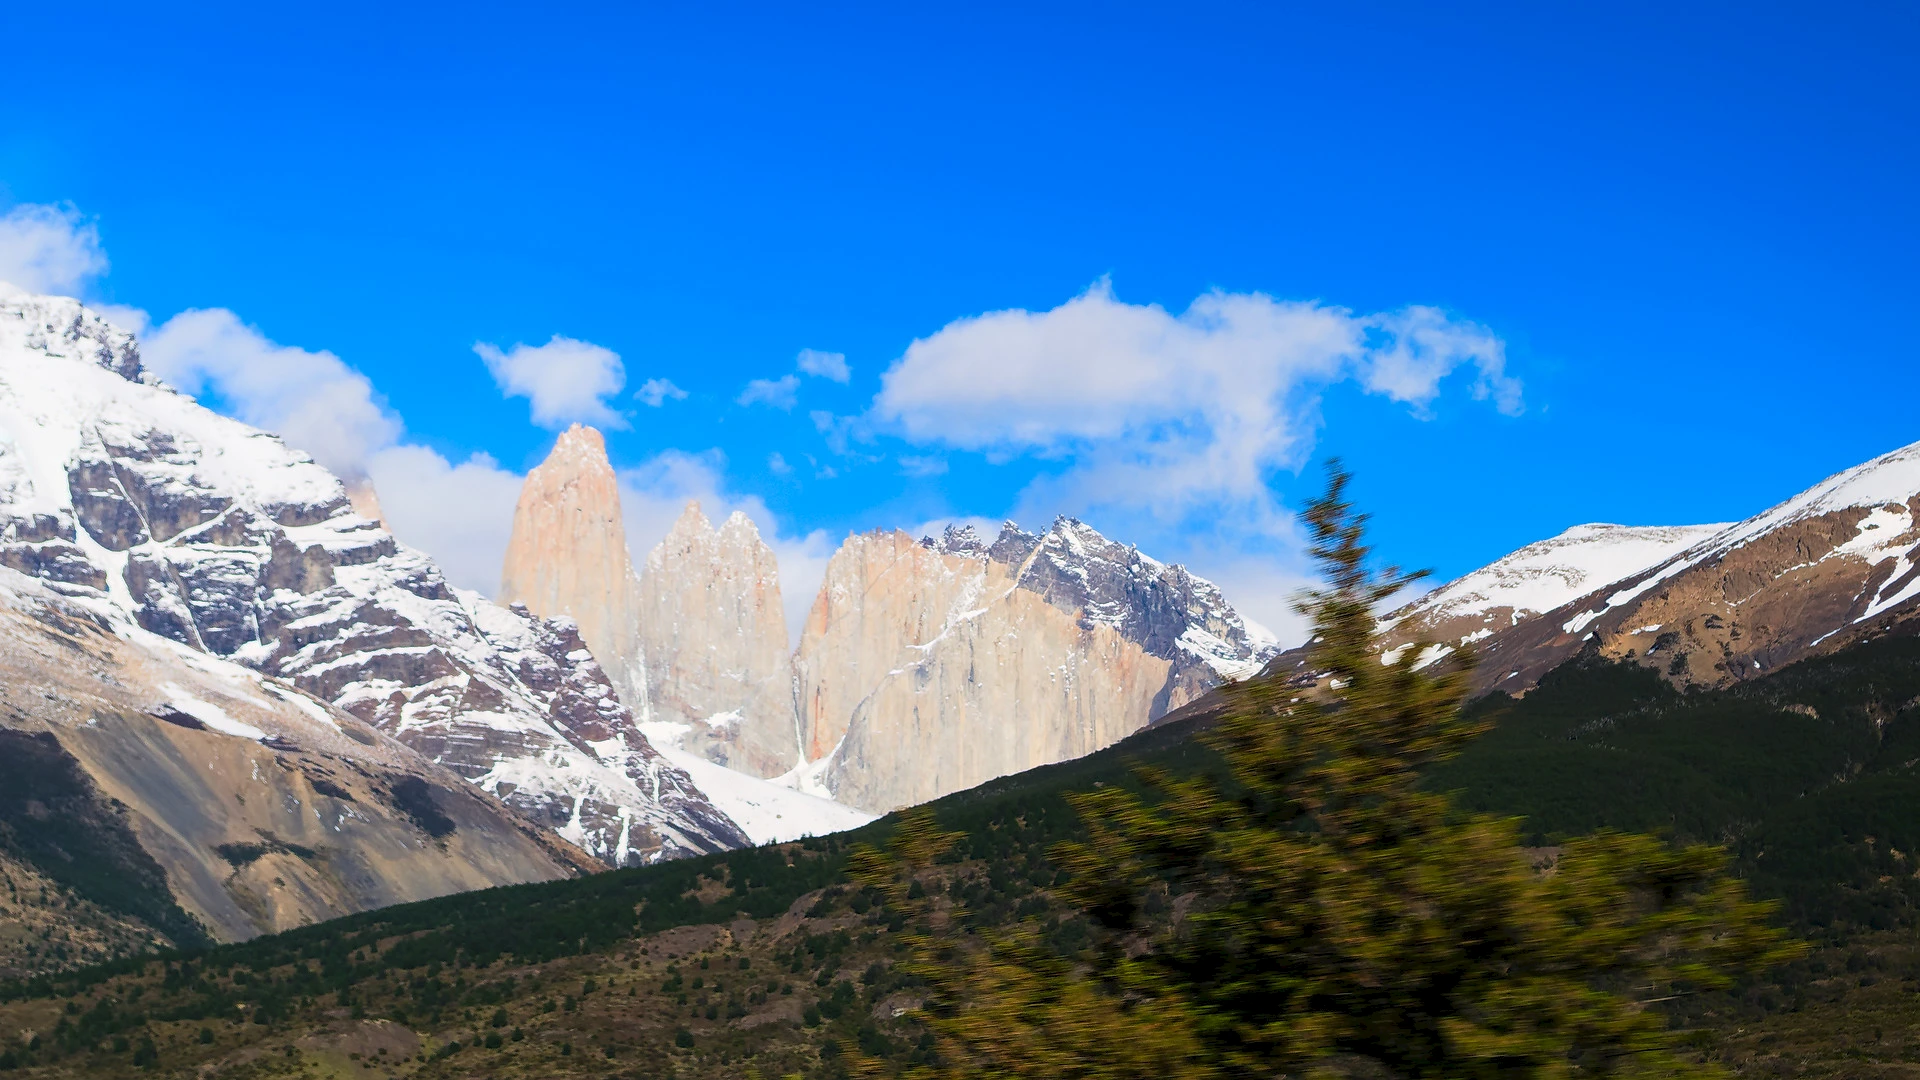 Trekking journey to the Torres del Paine summits